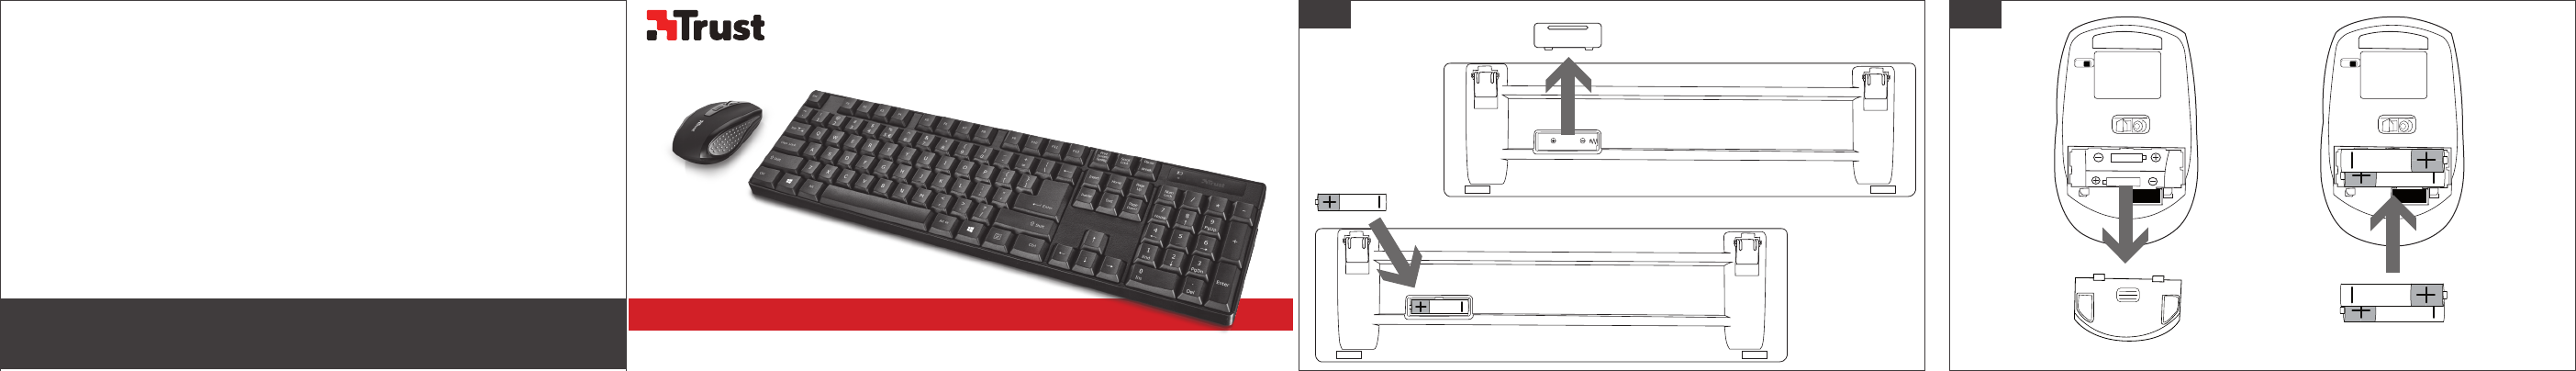 Piket Aankoop Kaal Handleiding Trust 21132 XIMO Wireless Keyboard and Mouse (pagina 1 van 2)  (Alle talen)